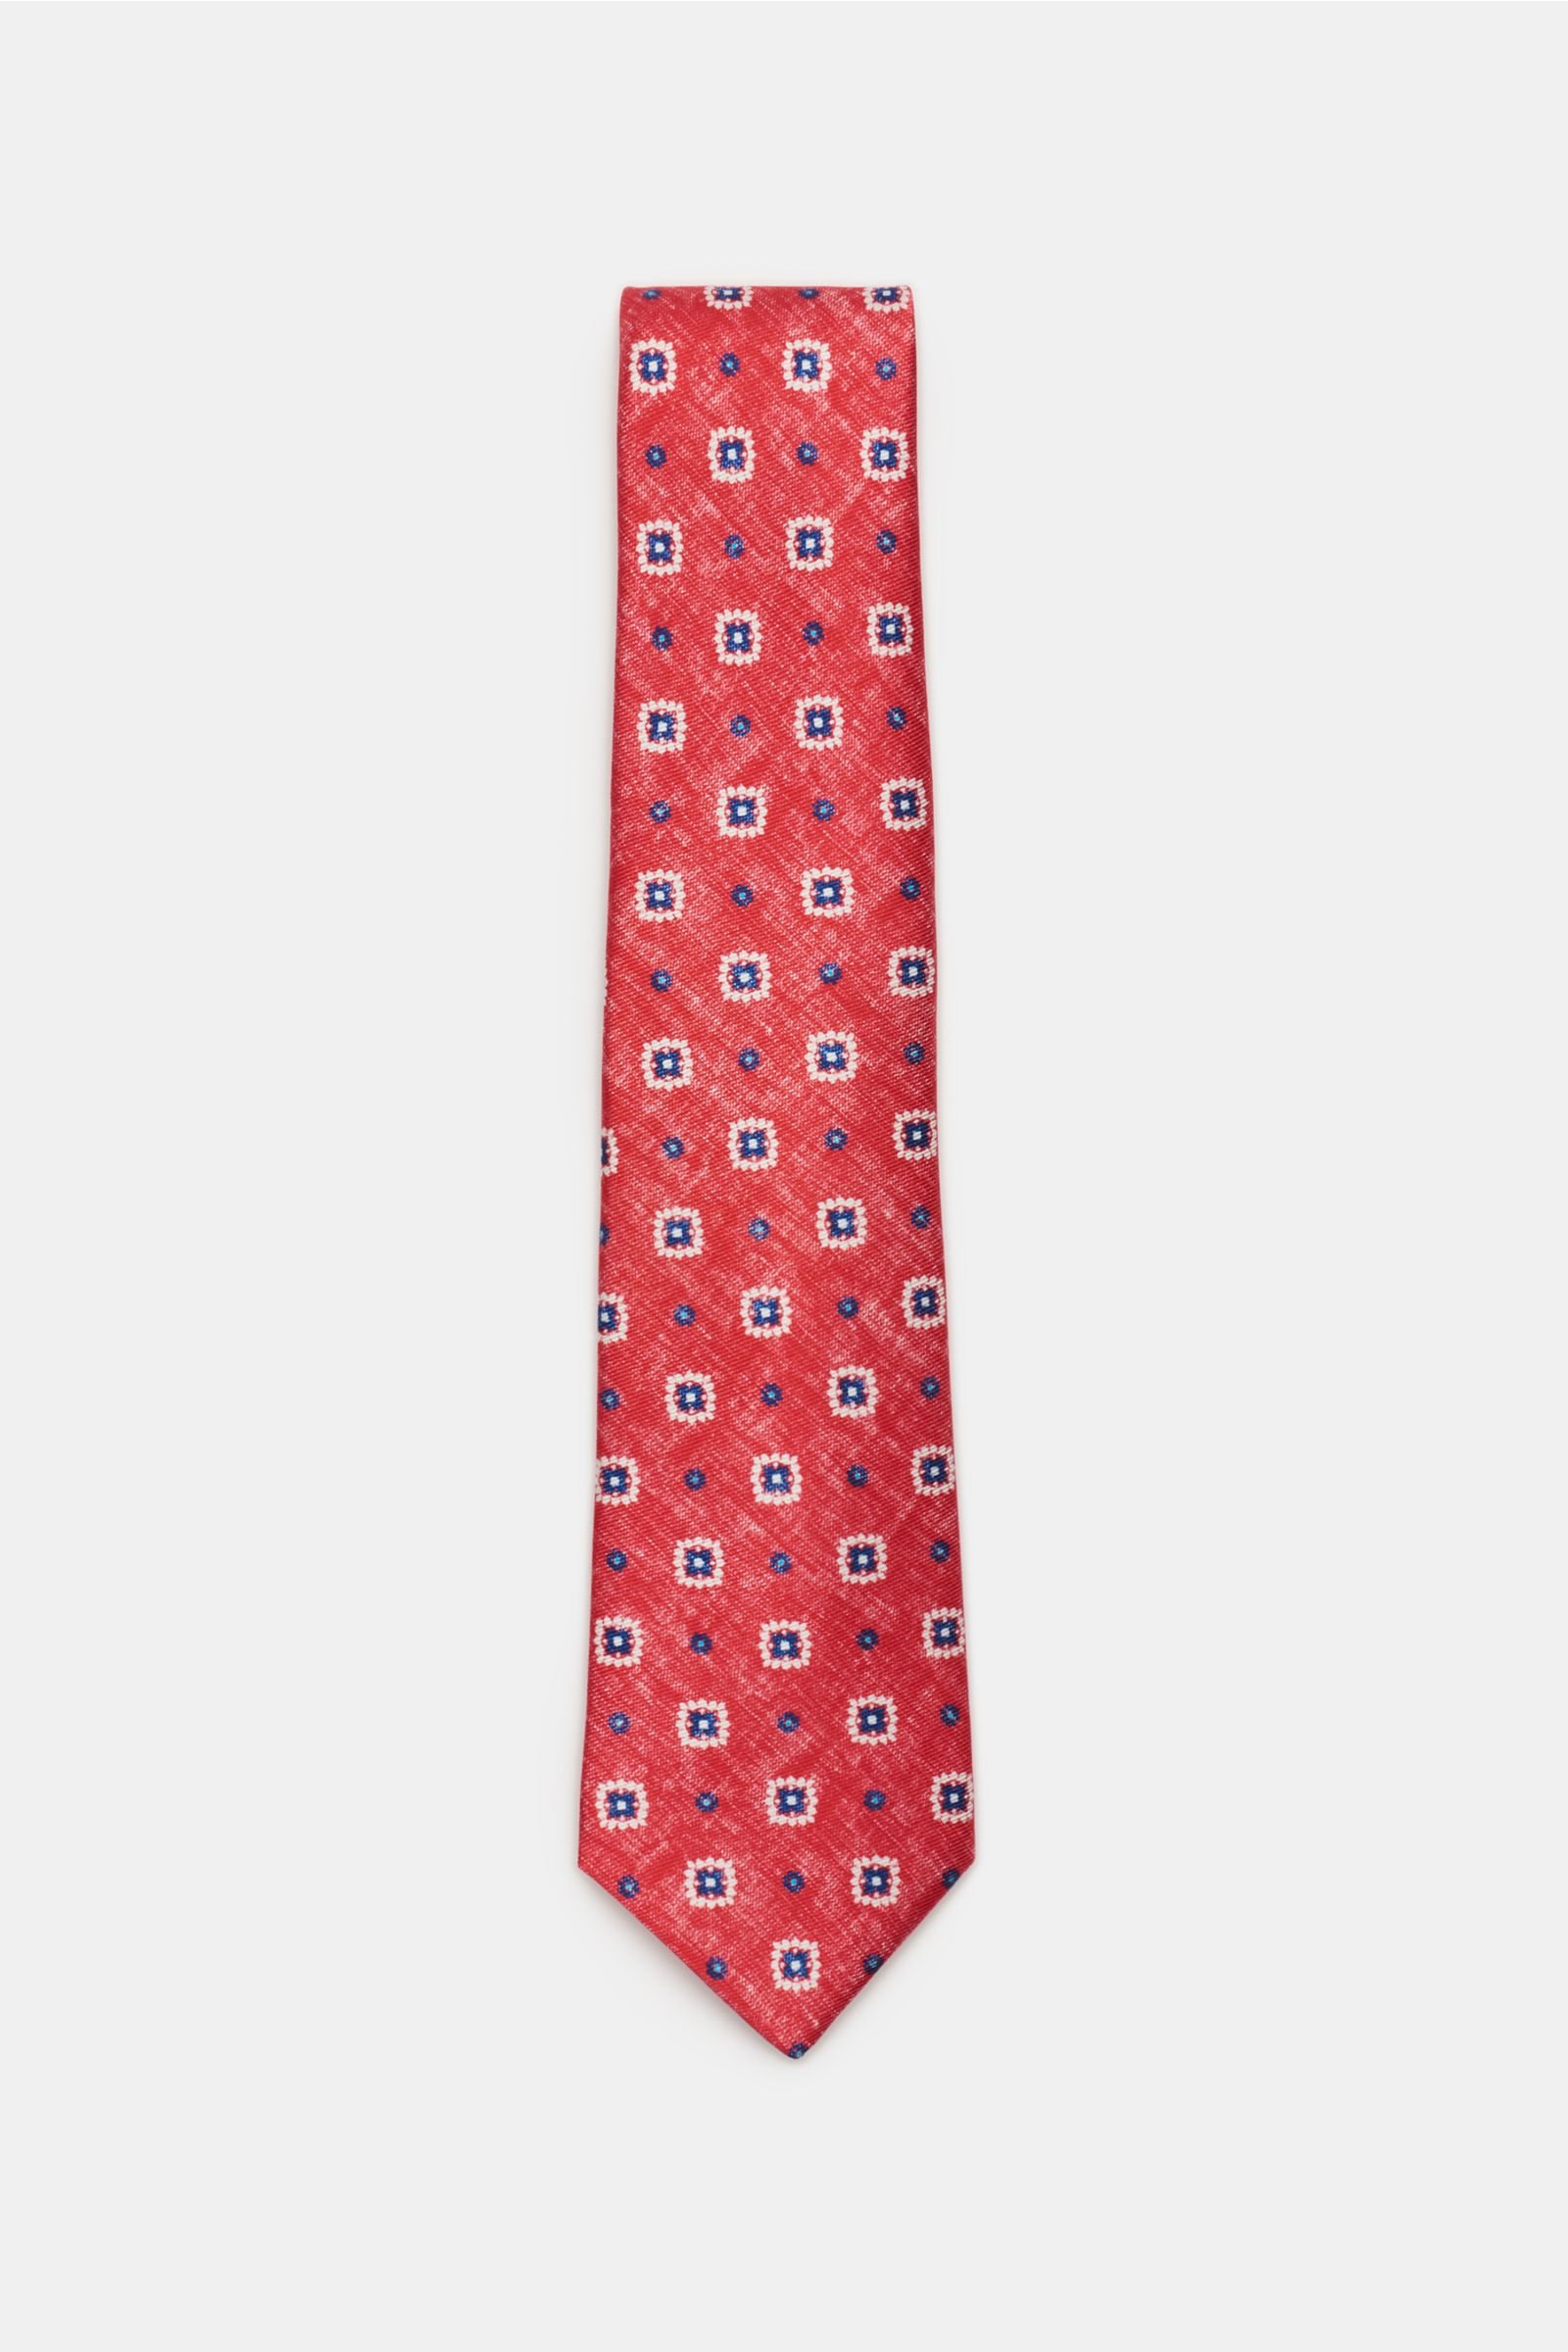 Silk tie navy/red patterned